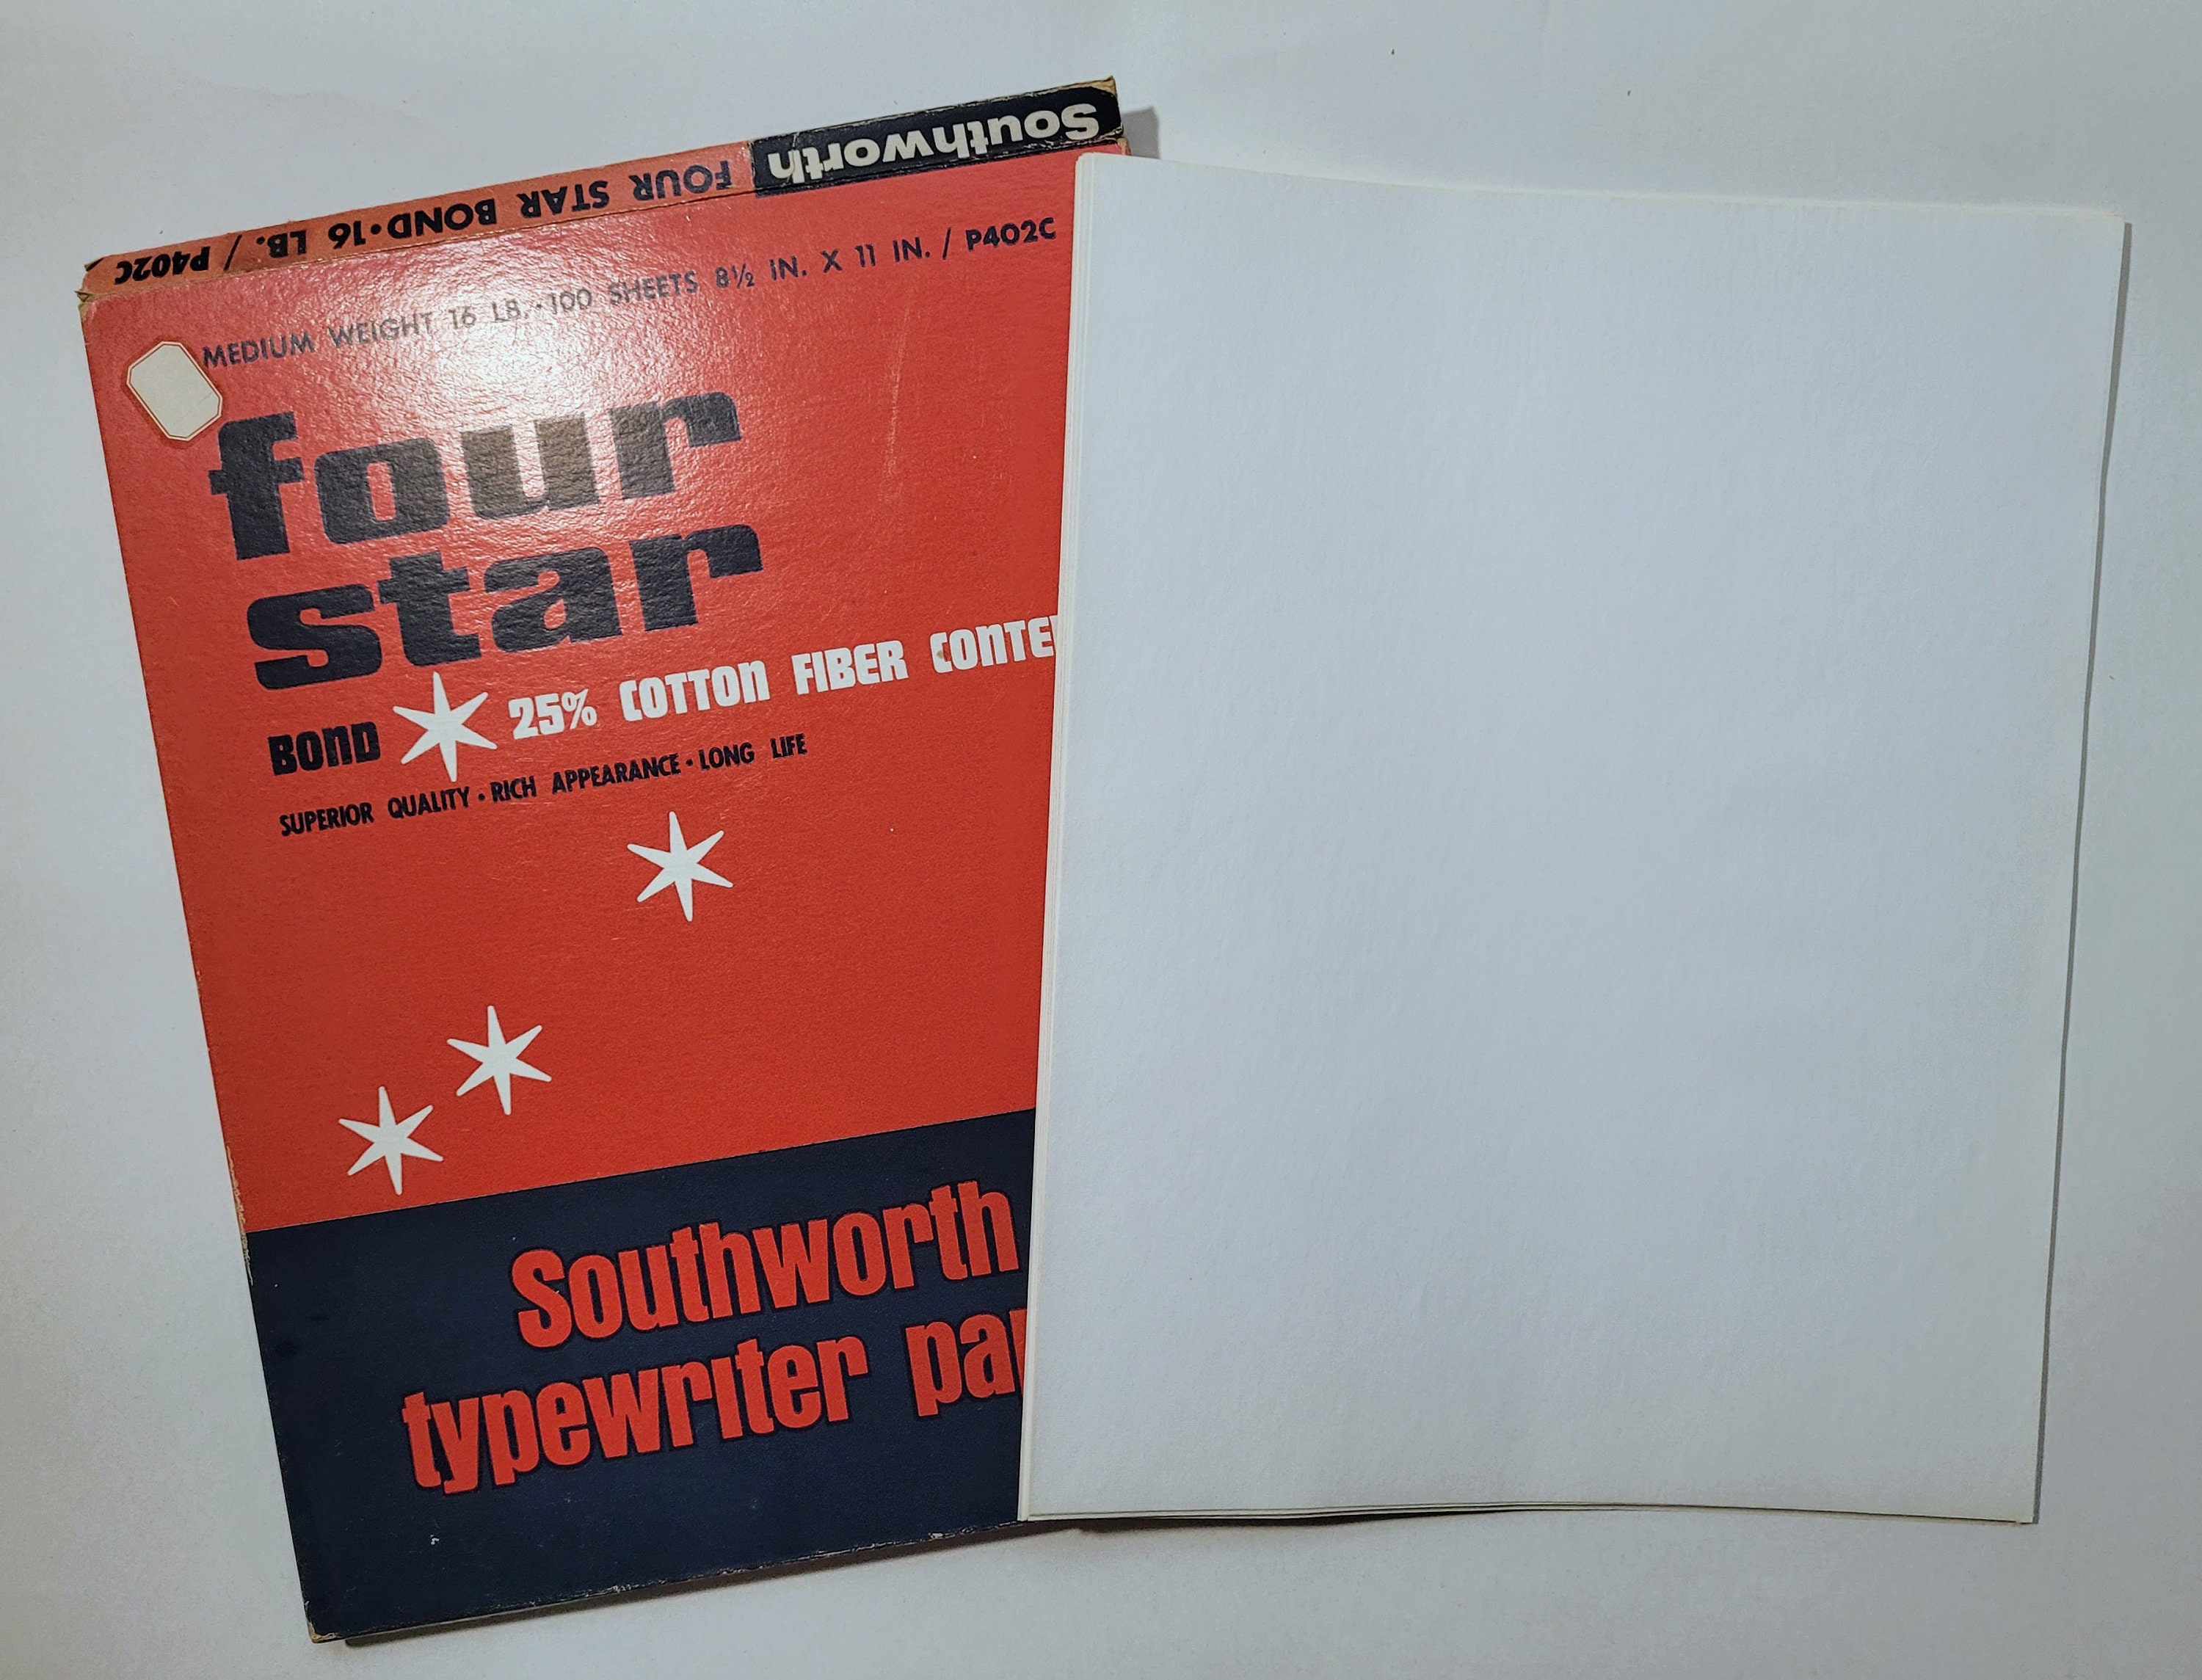 Southworth Resume Paper, Ivory, 24 lb, 8.5 x 11, Connoisseur Collection - 100 count